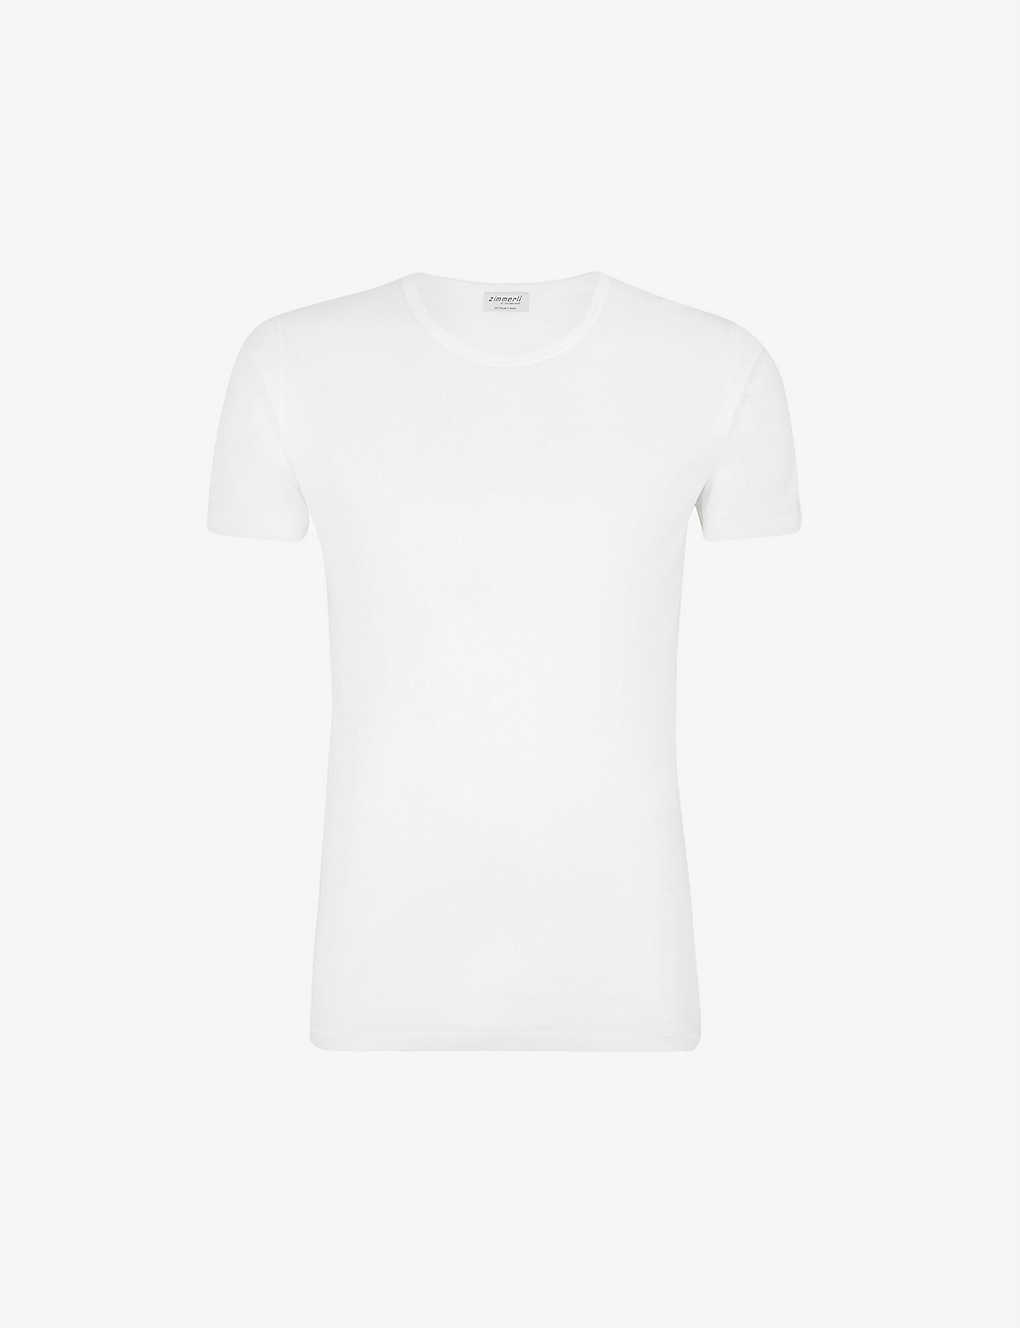 Shop Zimmerli Men's White Crew-neck Cotton T-shirt